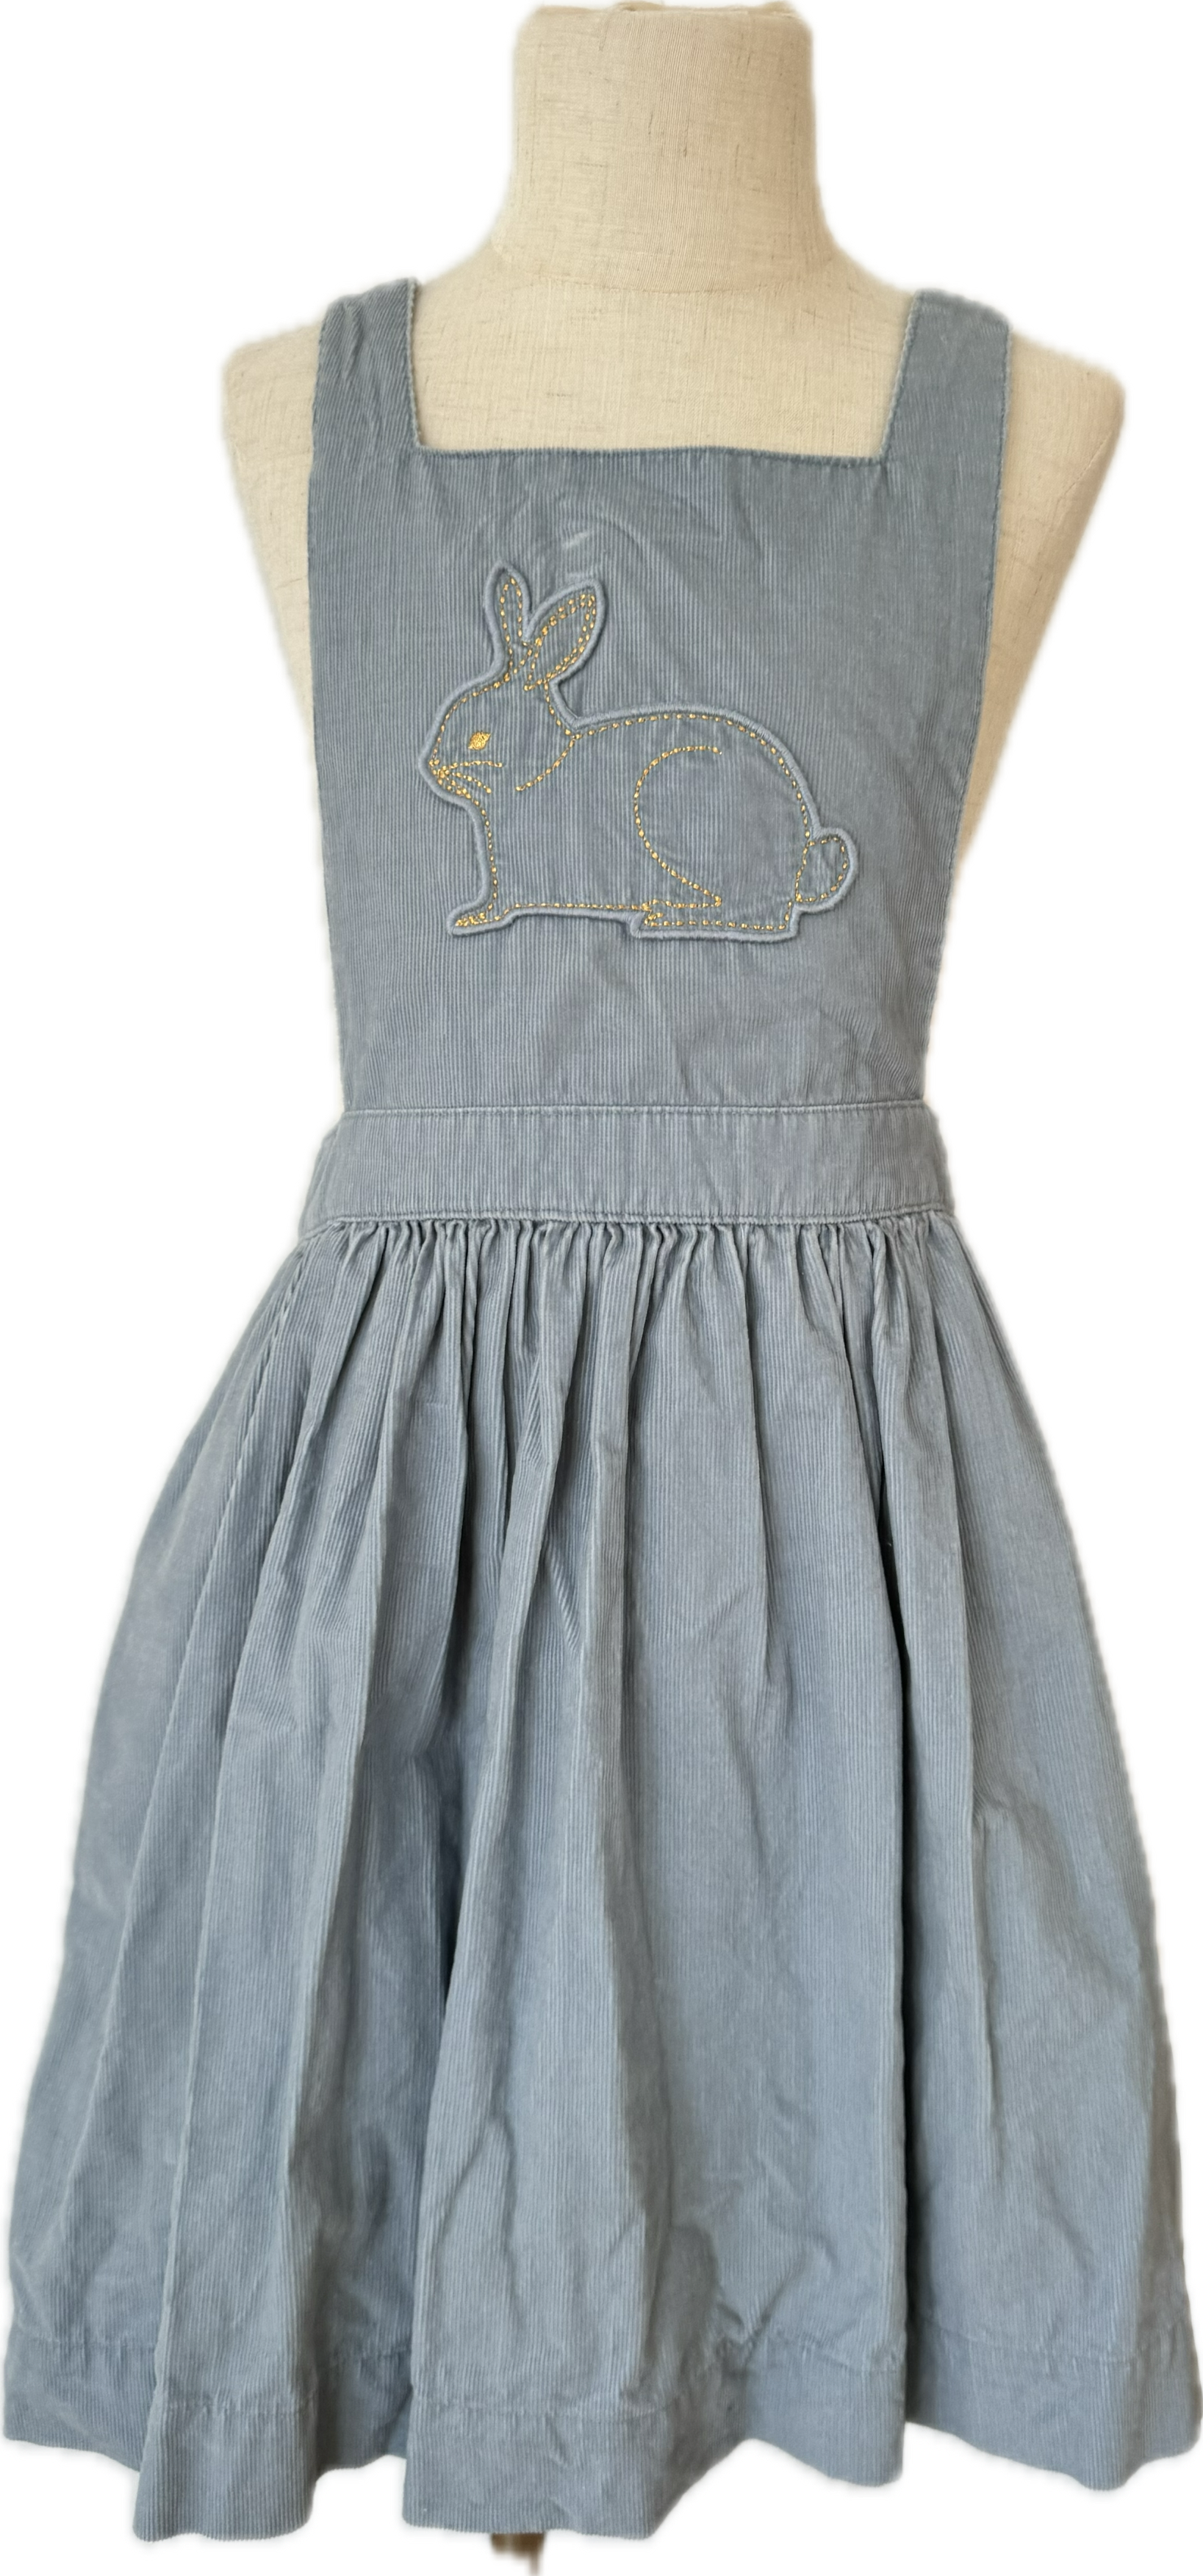 Mini Boden Overall Dress, Gray Bunny Girls Size 7-8